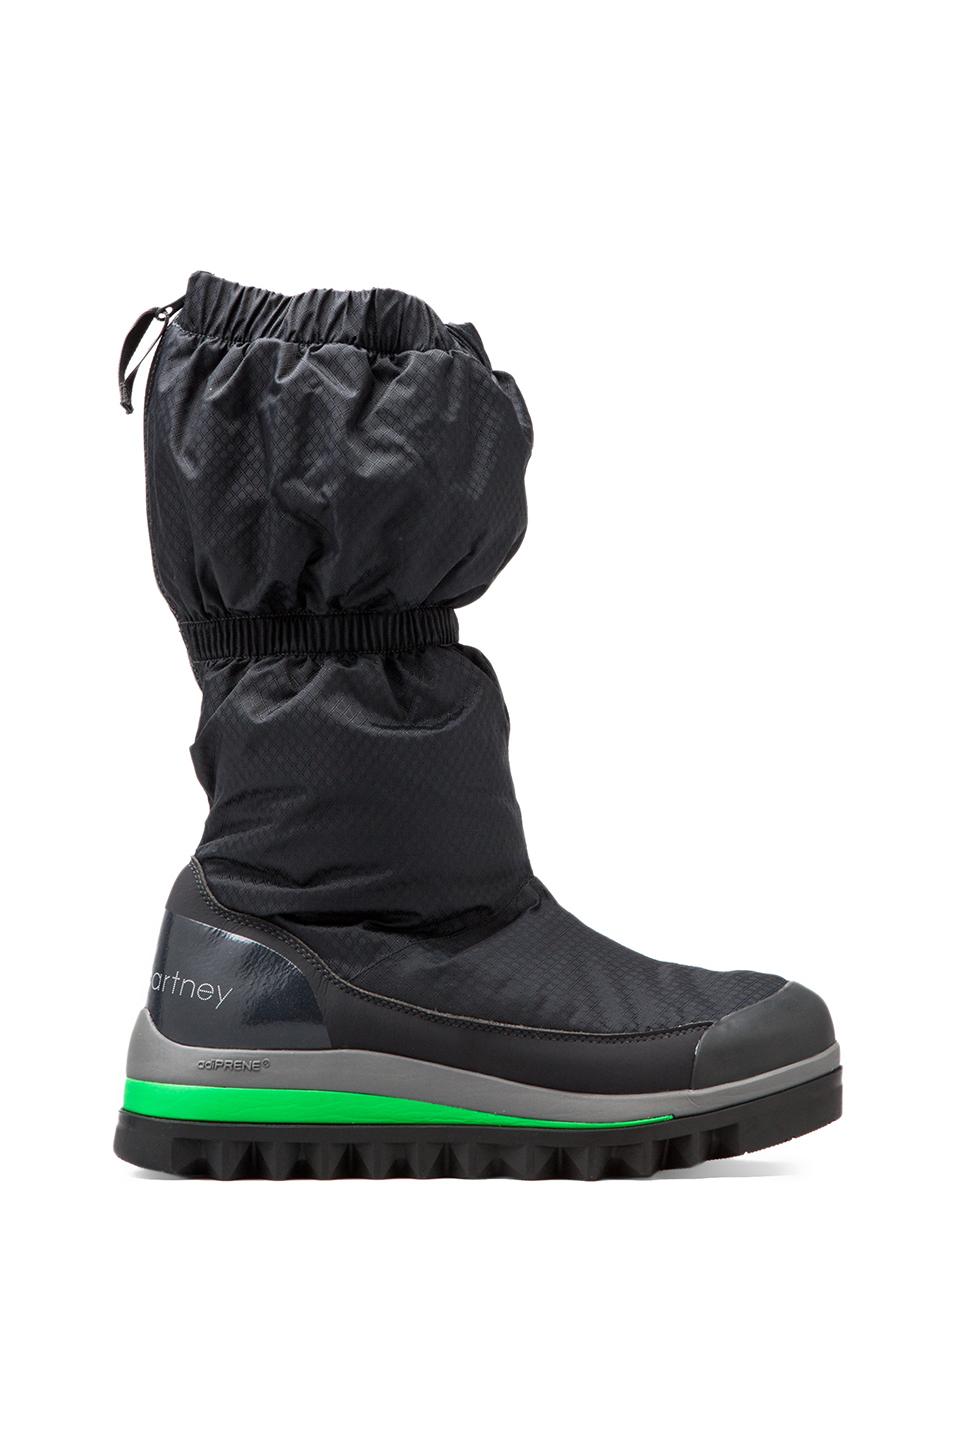 stella mccartney adidas boots